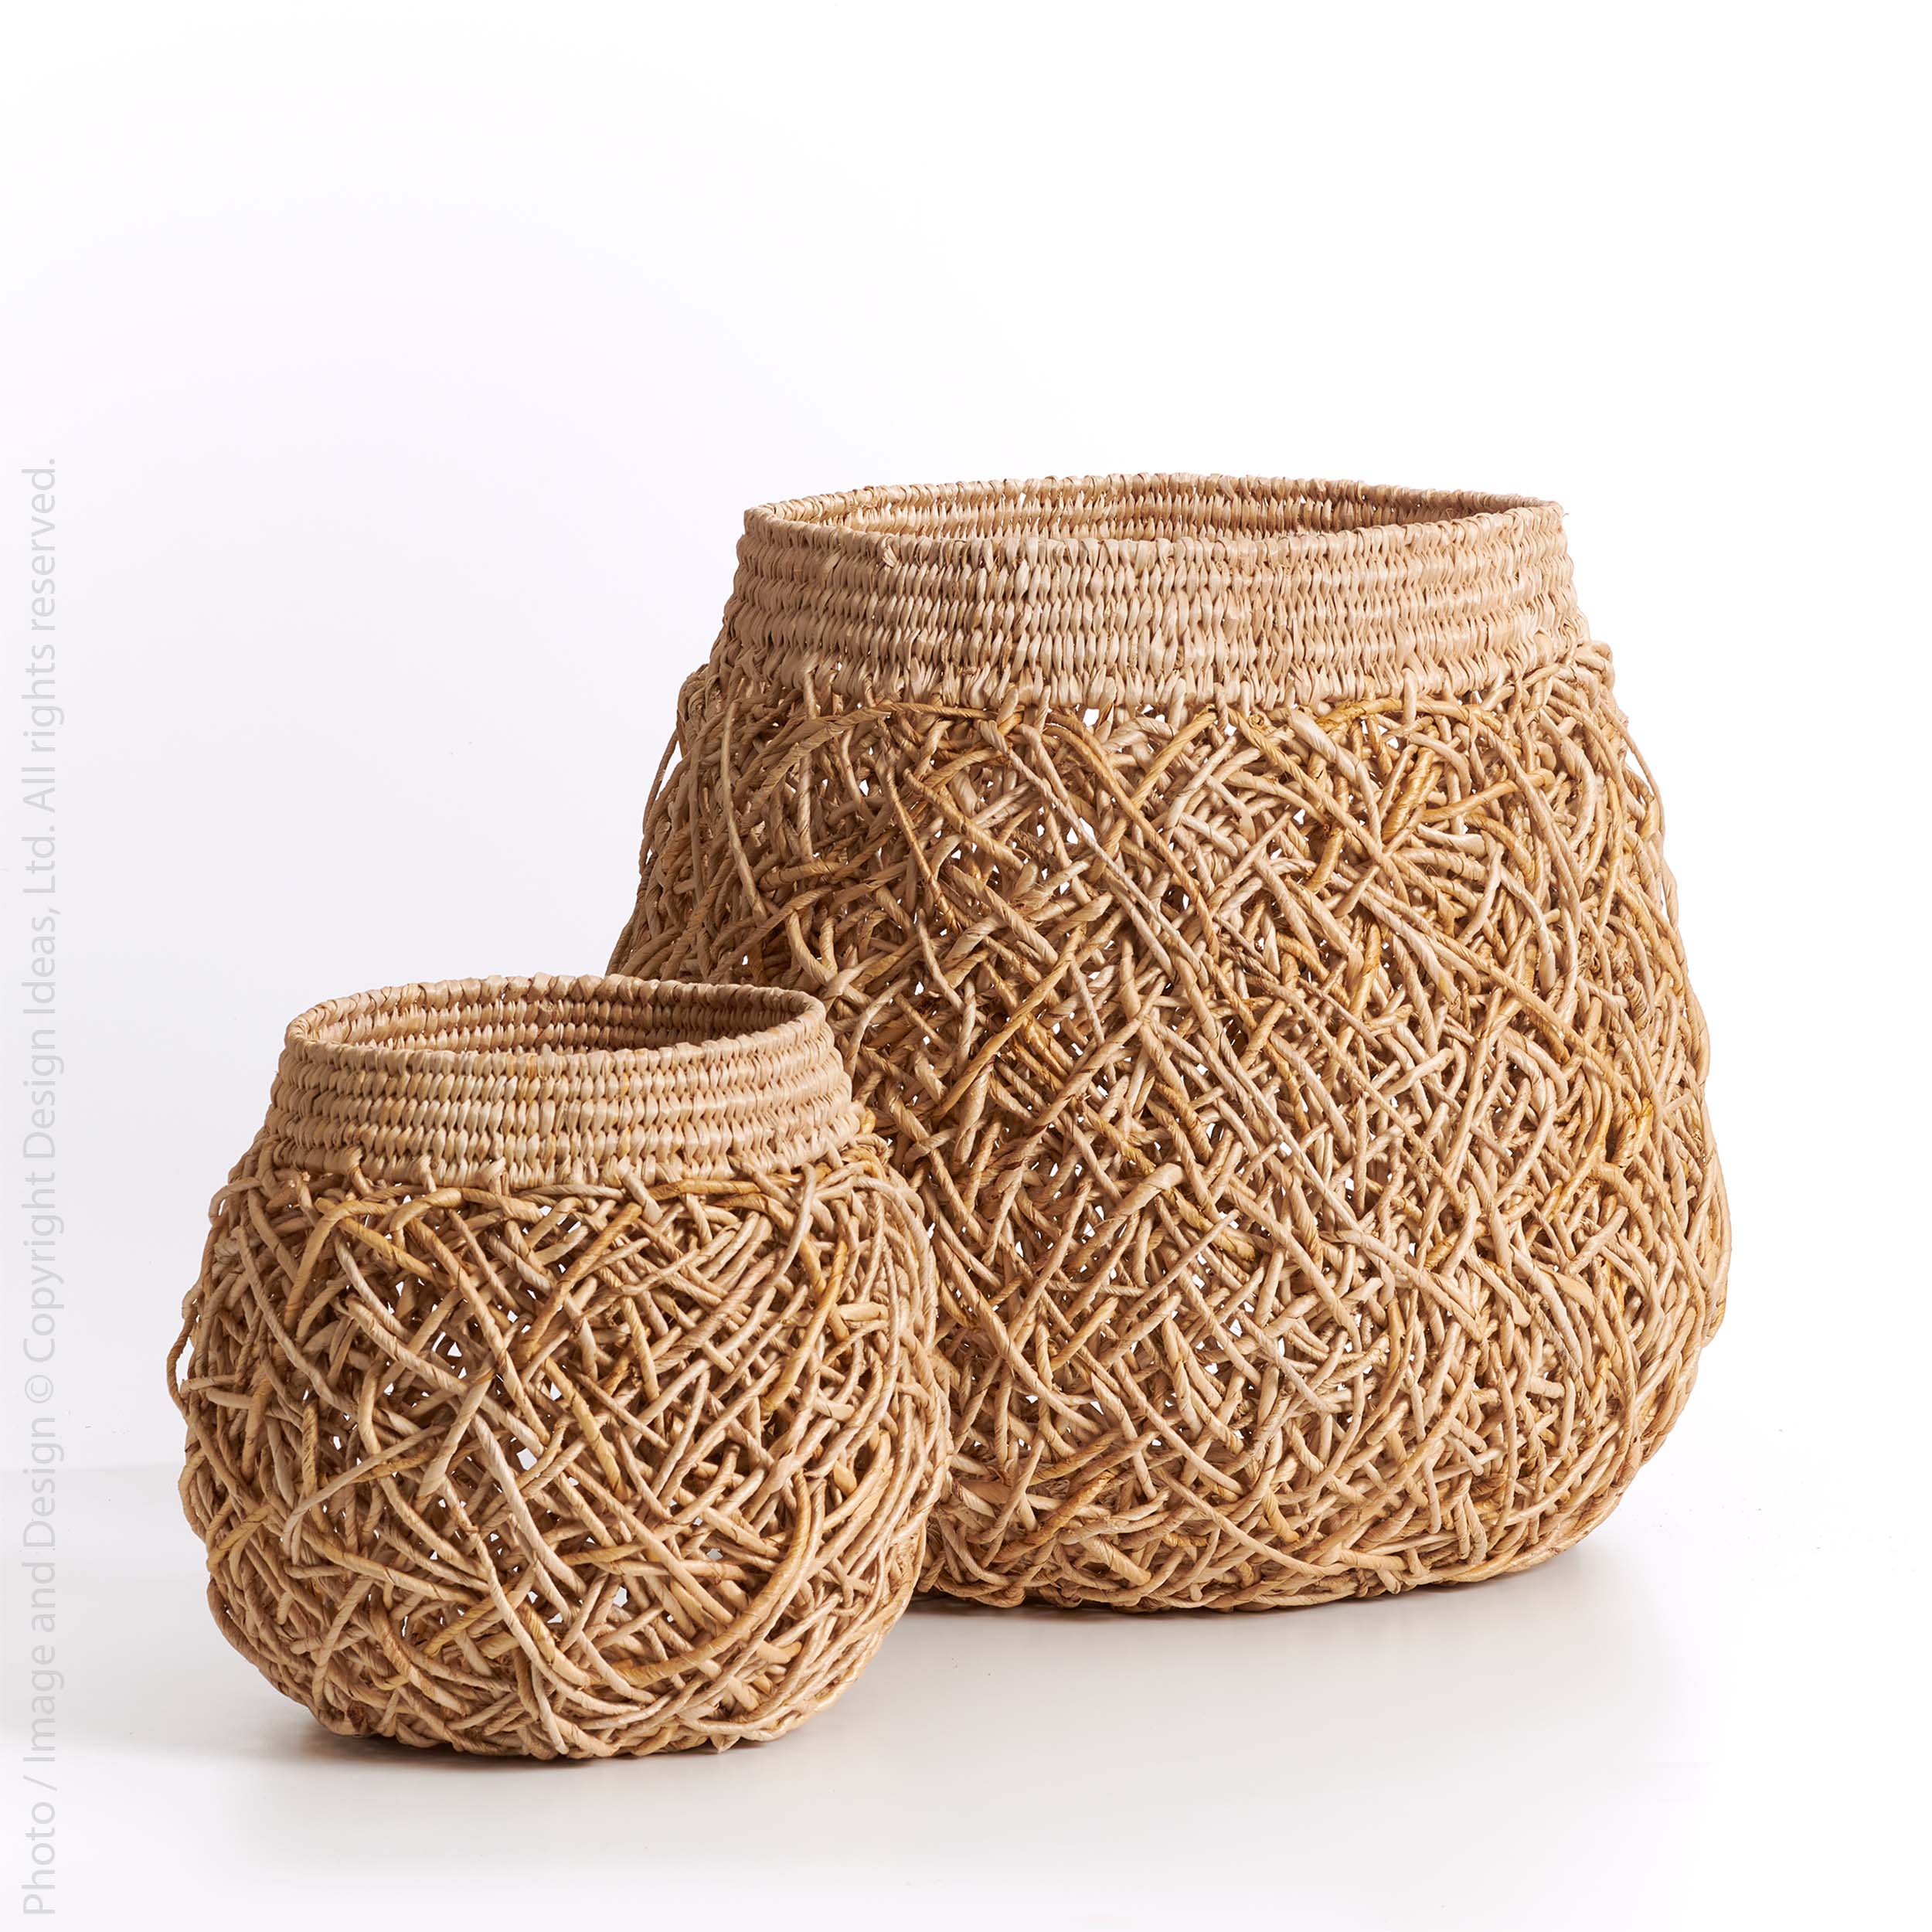 Baskets & Bins - texxture™ – texxture home